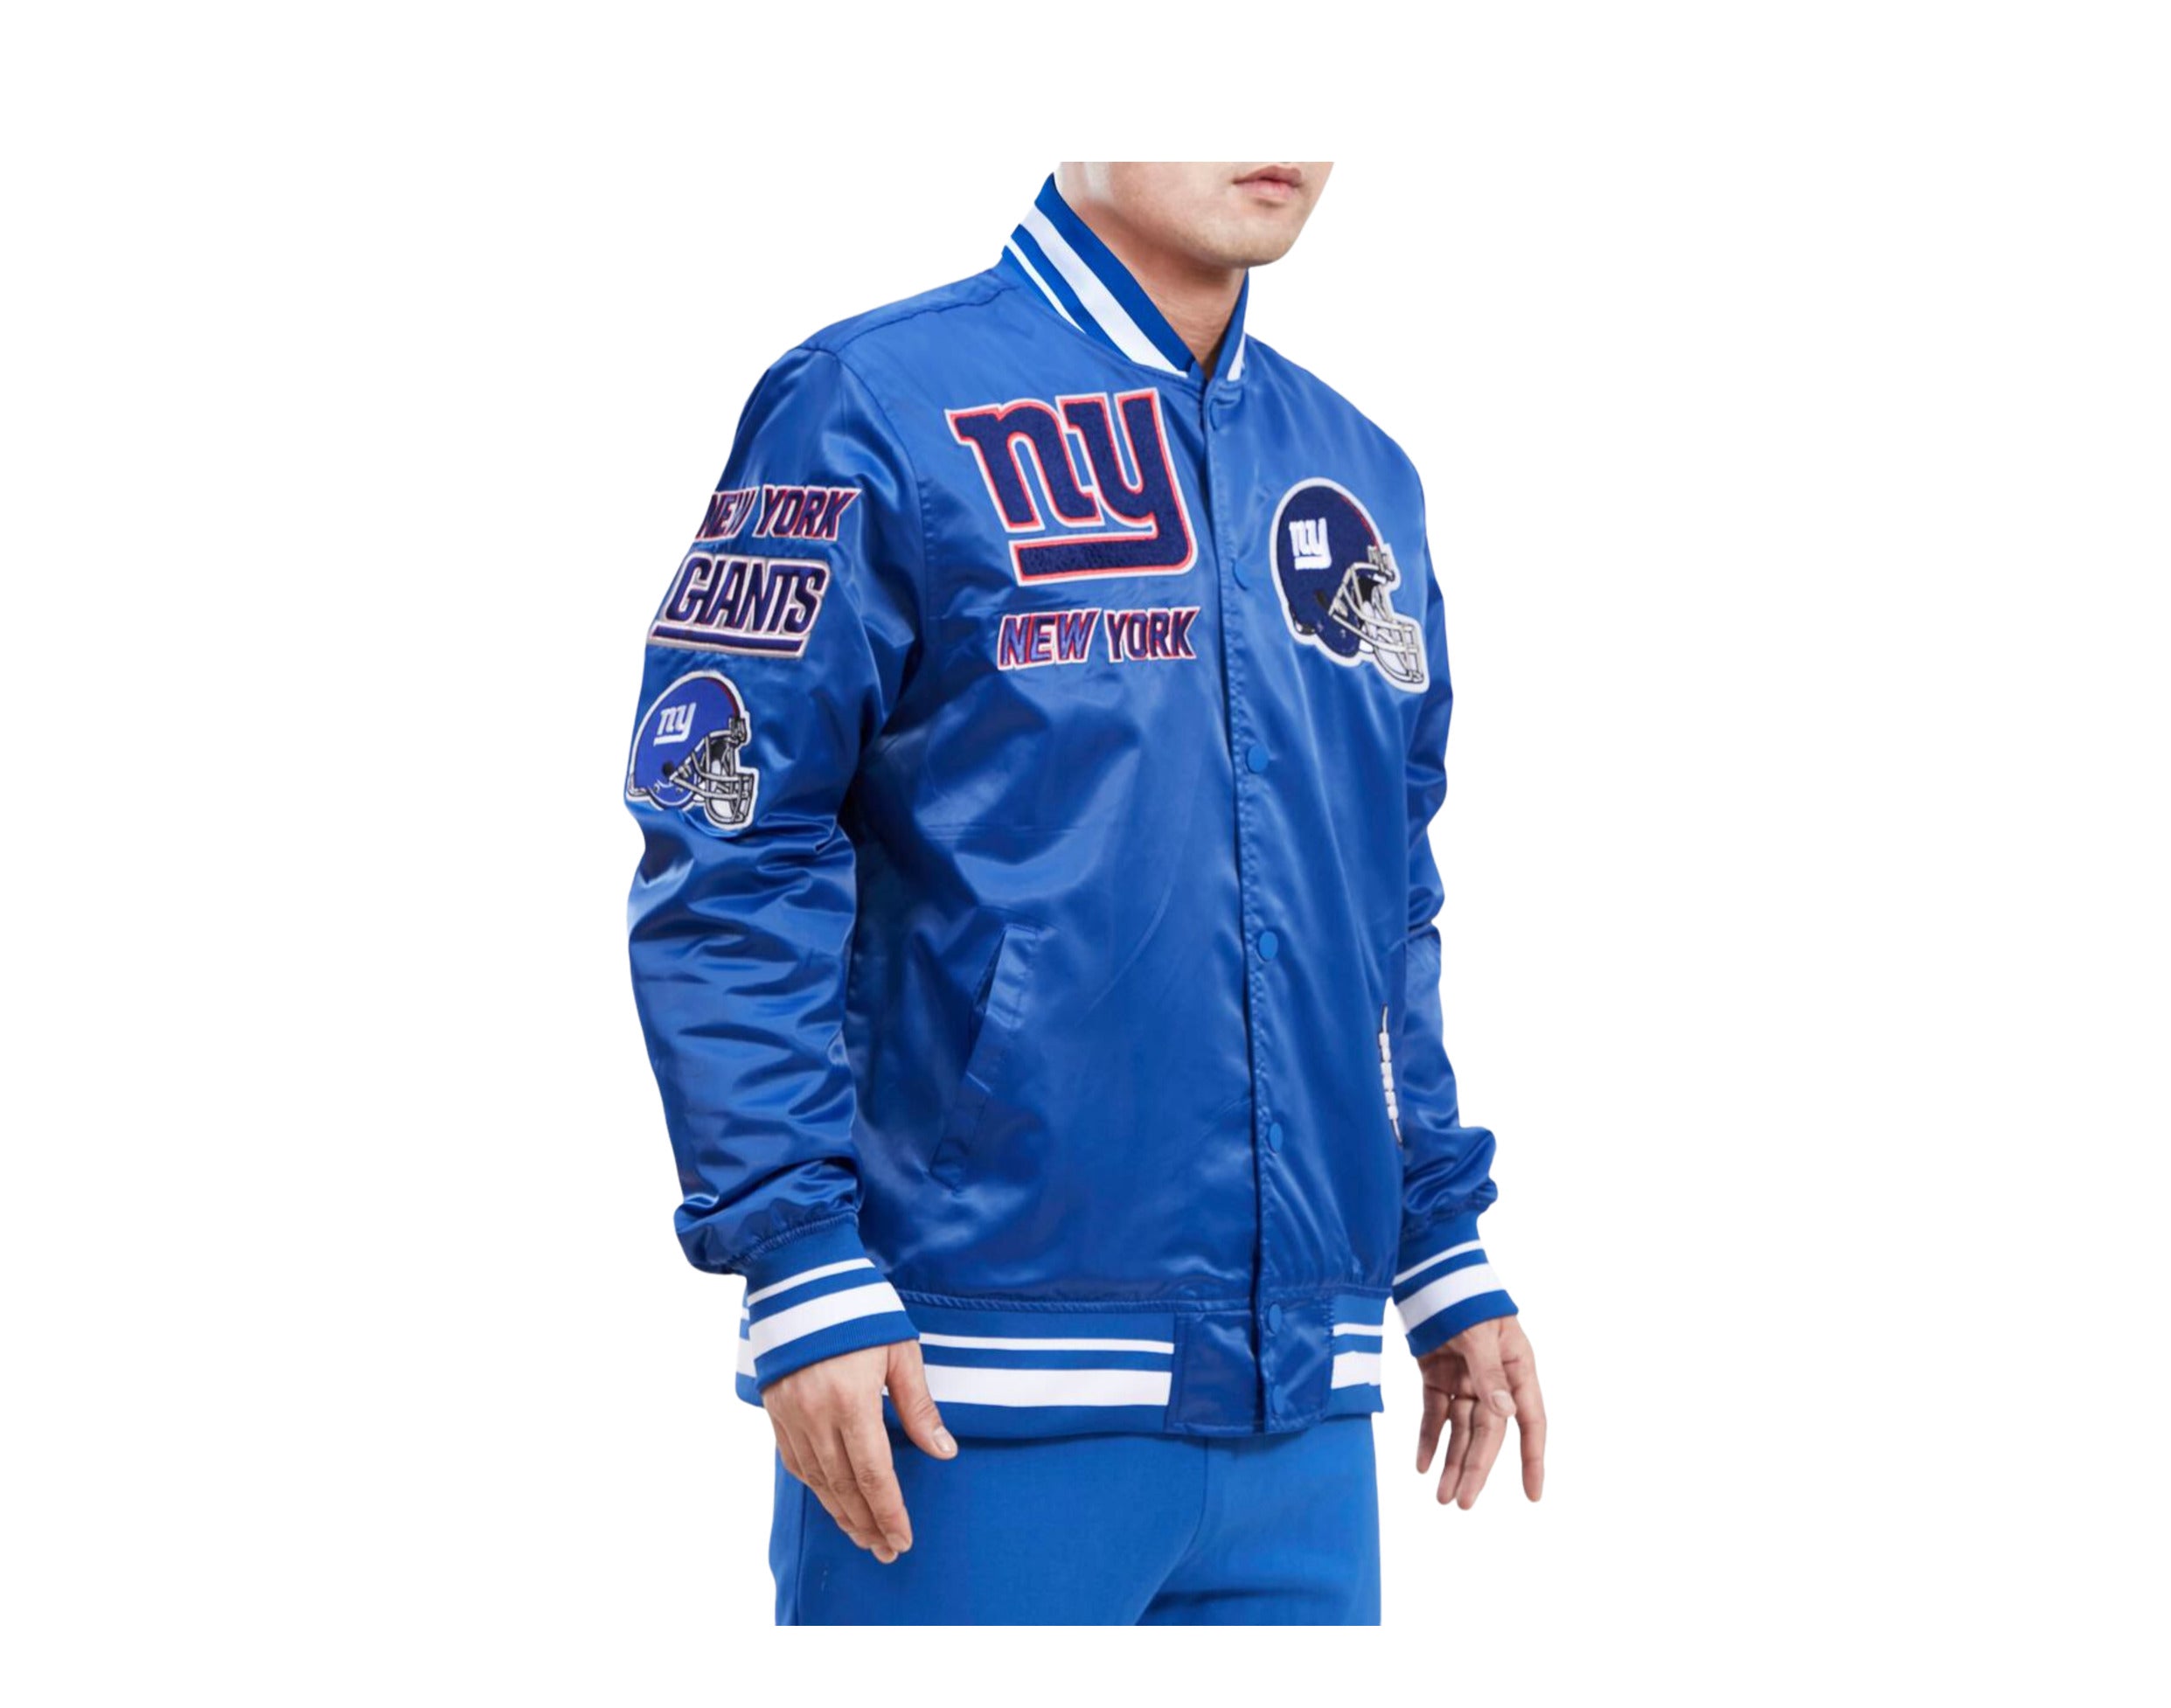 NFL Unisex Docket Union Suit (Size XXXL) Las Vegas Raiders, Polyester,Spandex - ShoeMall